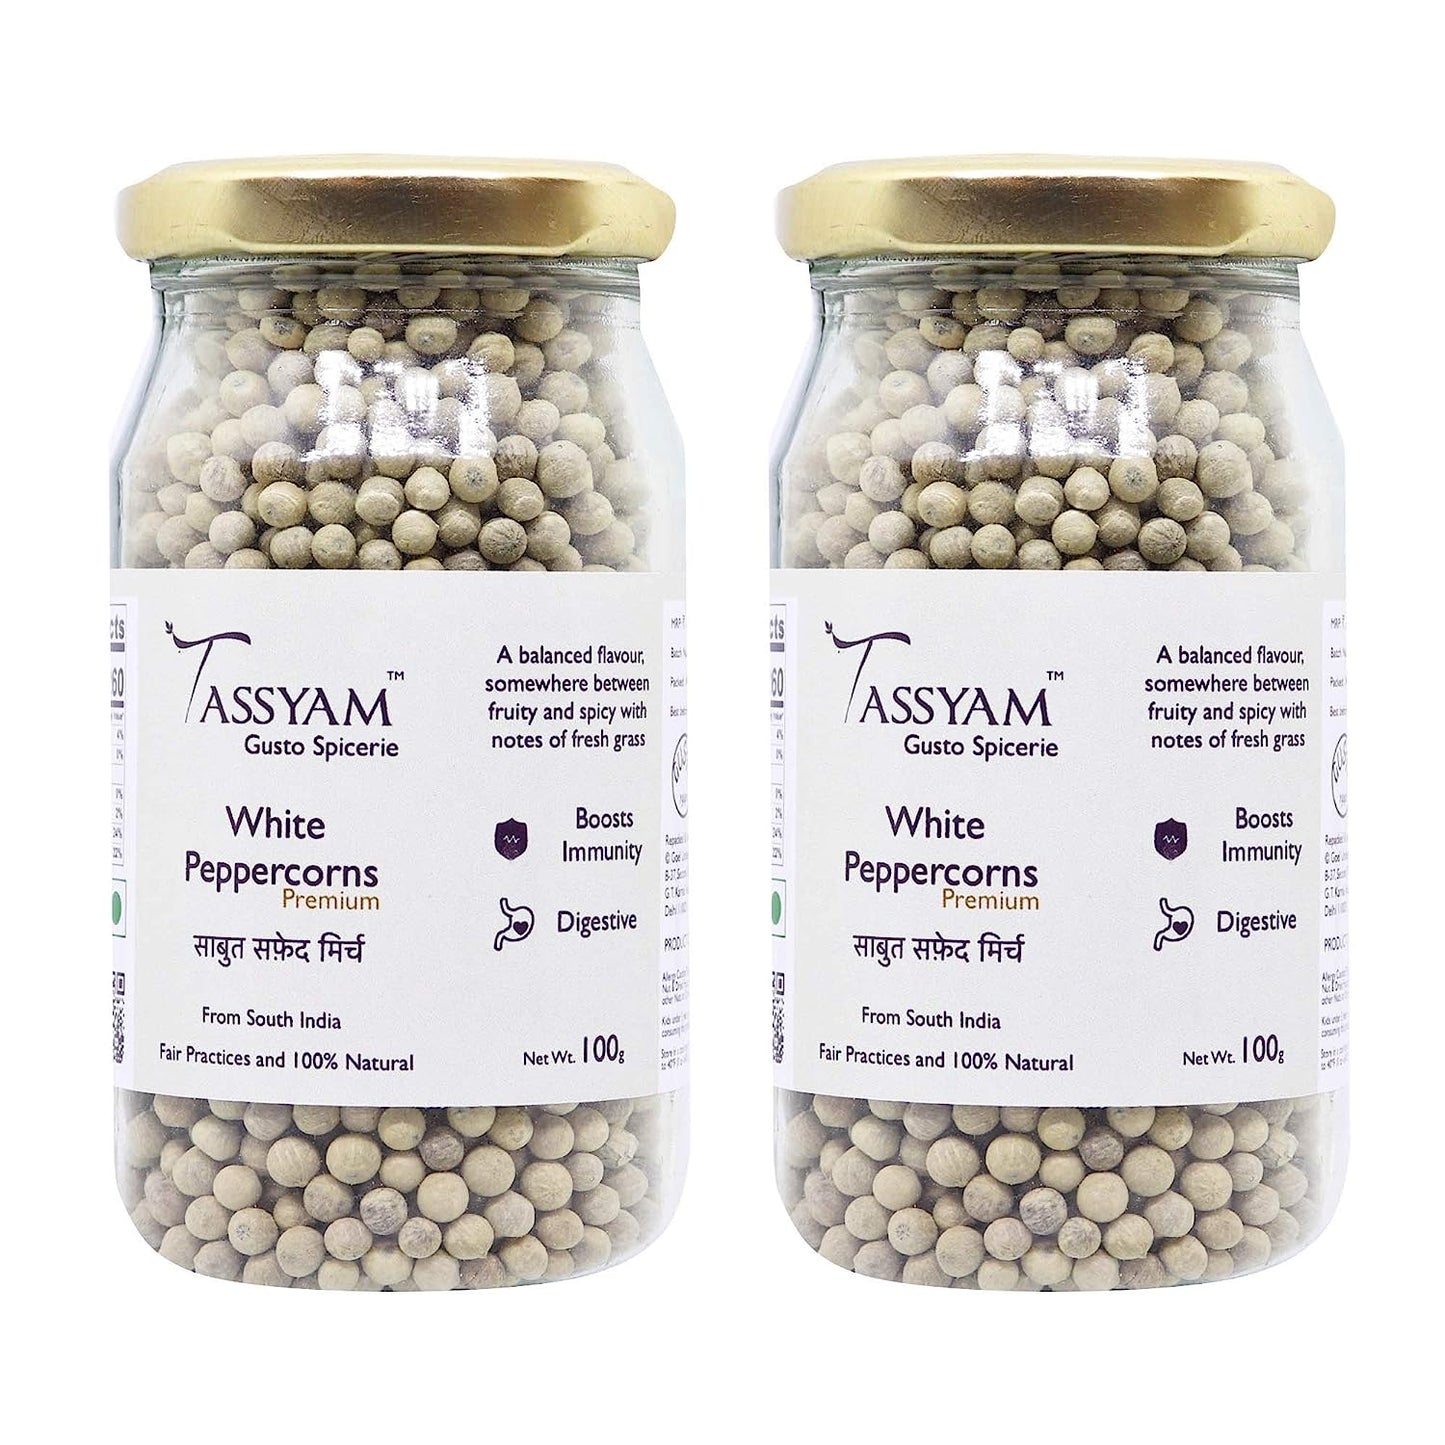 White Peppercorns - Tassyam Organics